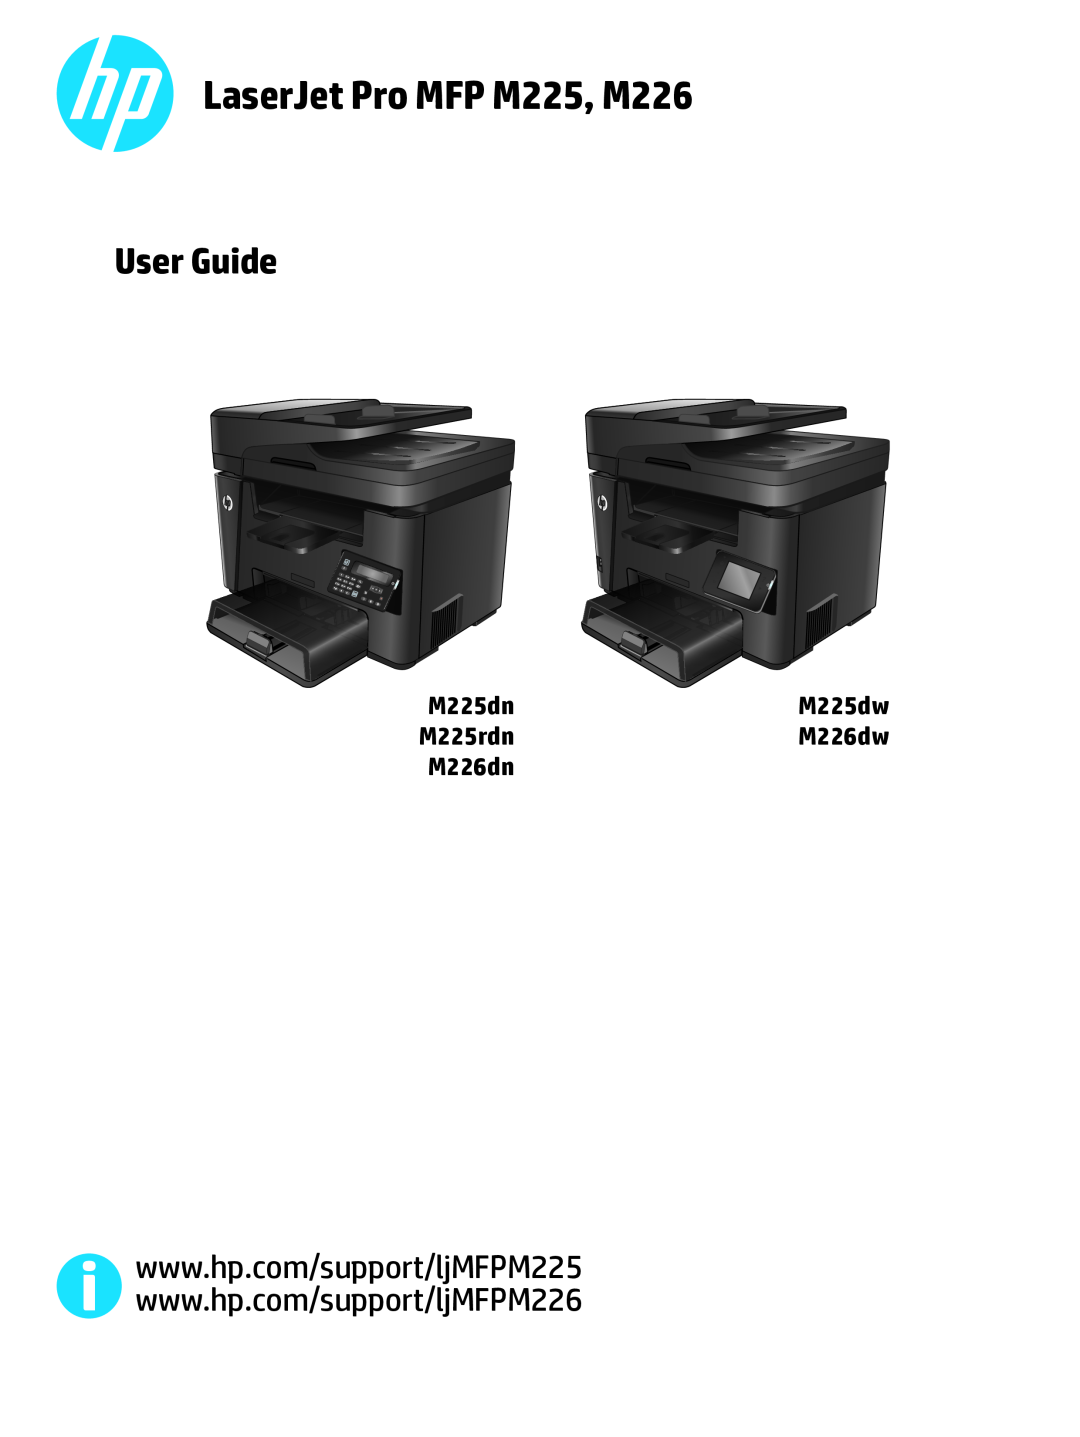 HP MFP M225dw, MFP M225dn manual LaserJet Pro MFP M225, M226, User Guide, M226dn, M225rdn, M226dw 